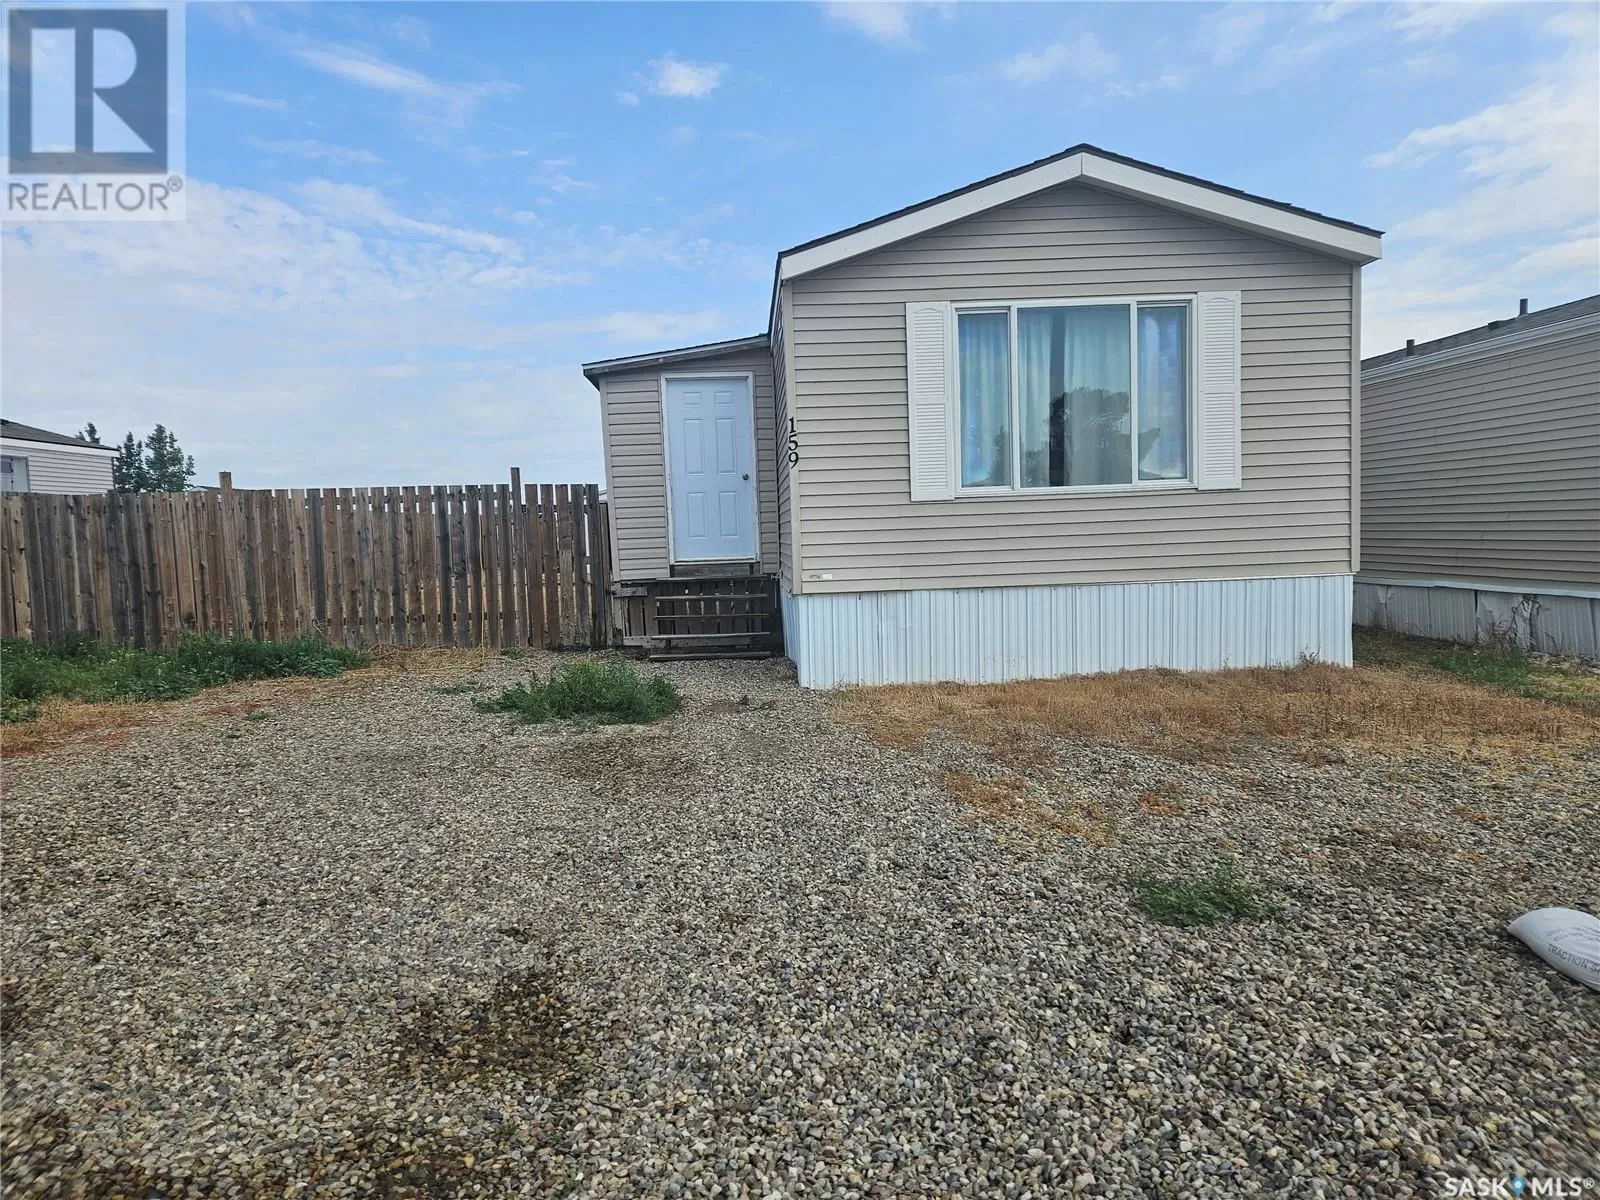 Mobile Home for rent: 159 Prairie Sun Court, Swift Current, Saskatchewan S9H 3X6